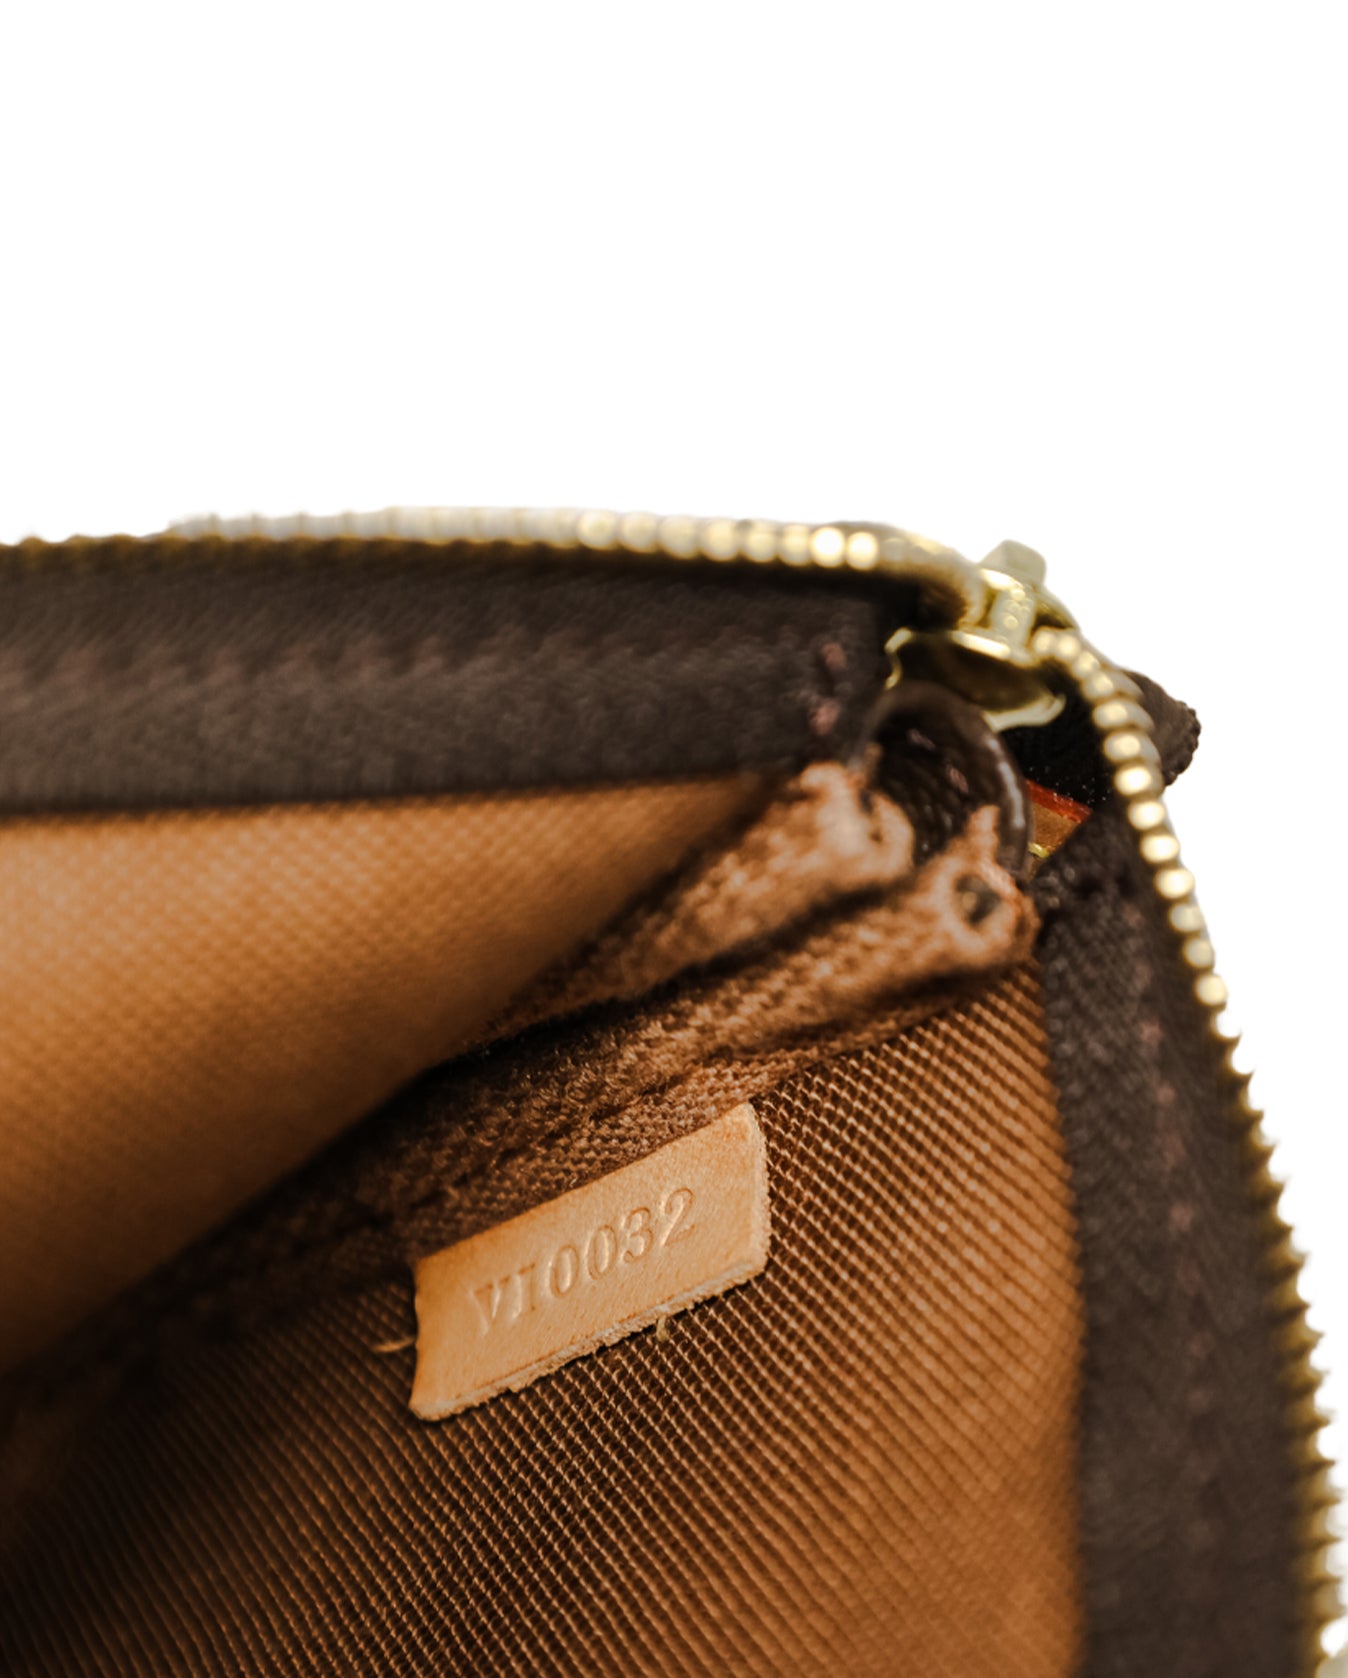 Louis Vuitton Monogram 2 in 1 Mini Round Pochette Top Handle Satchel Bags